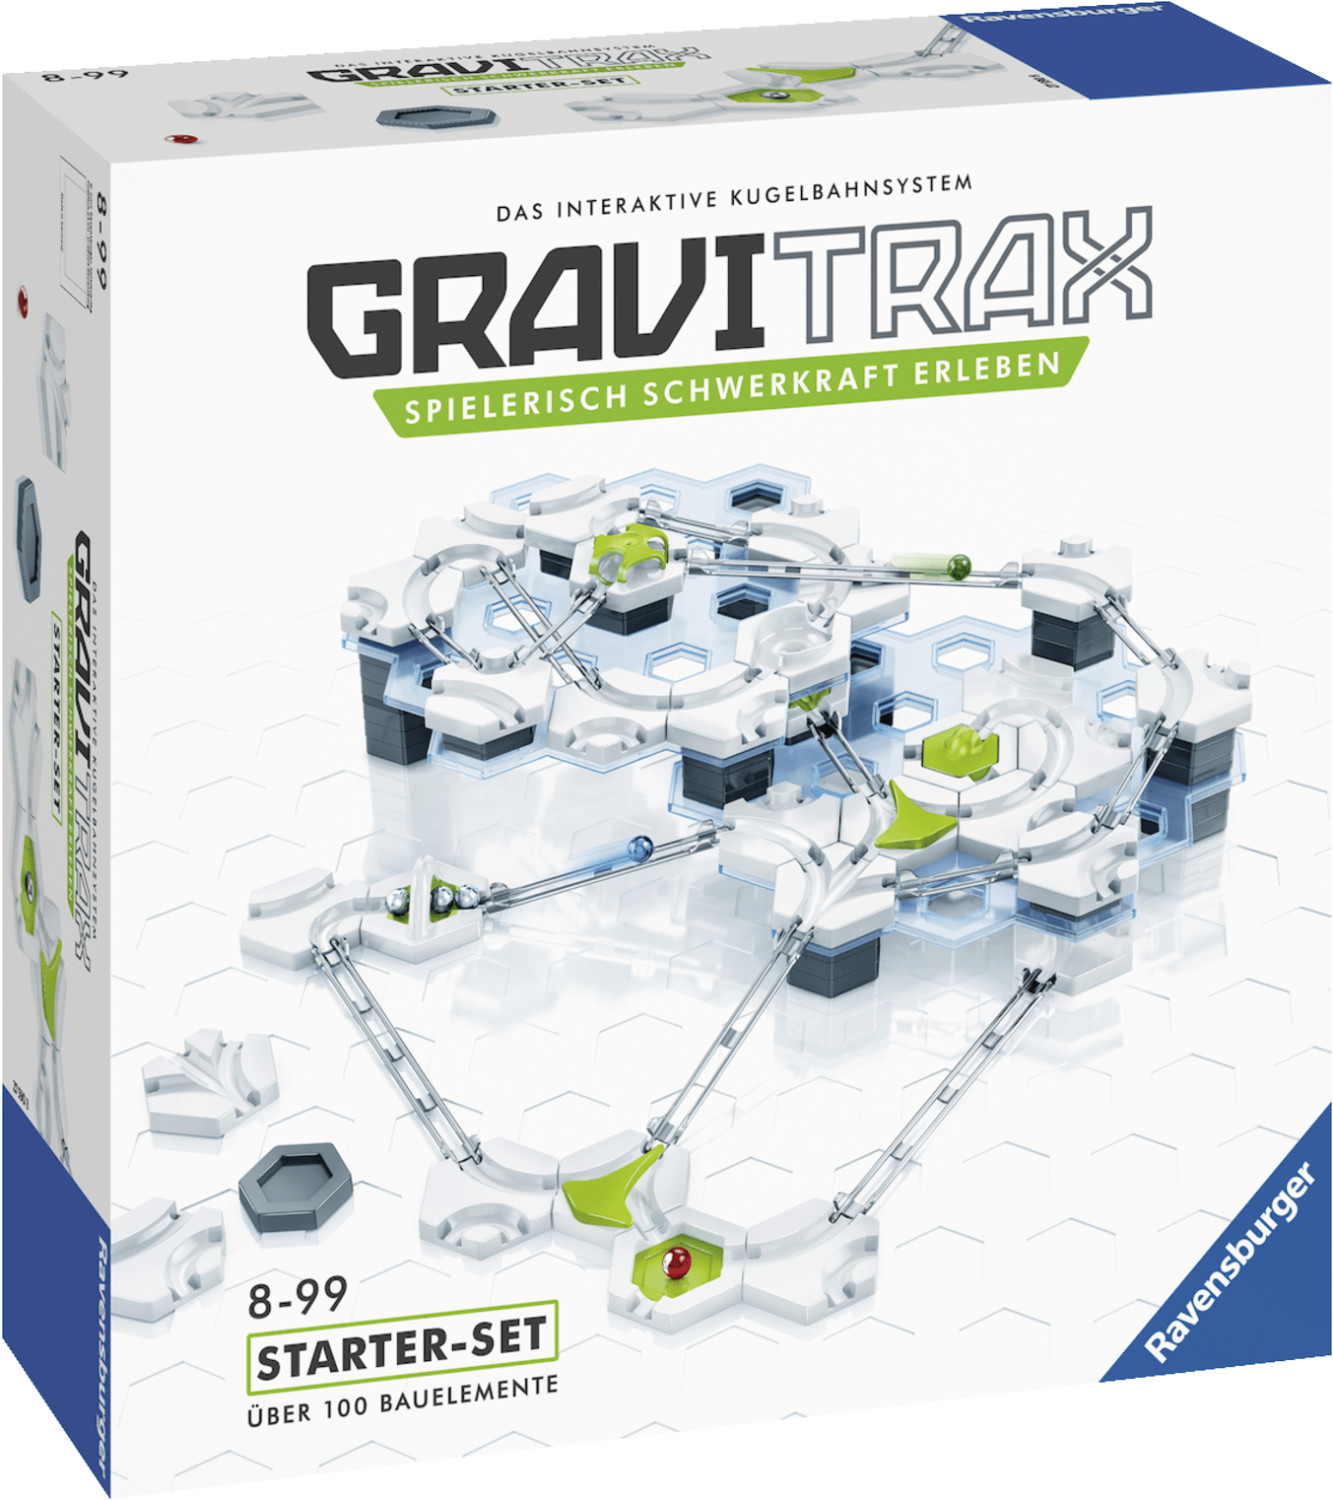 GraviTrax Starterset: Das interaktive Kugelbahnsystem